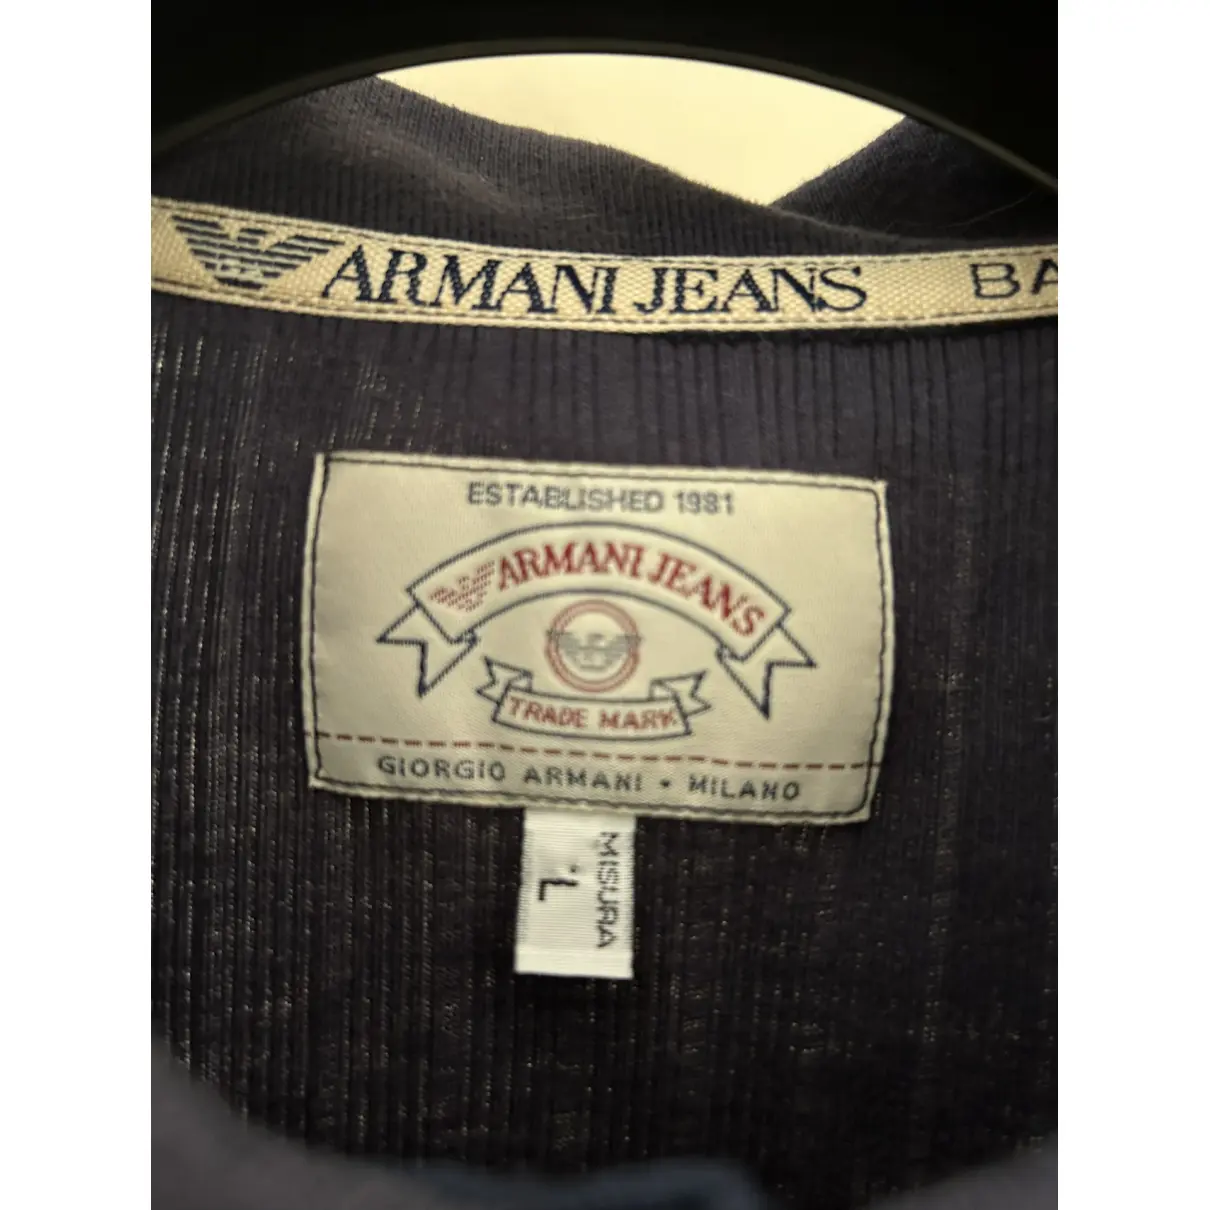 Buy Armani Jeans Polo shirt online